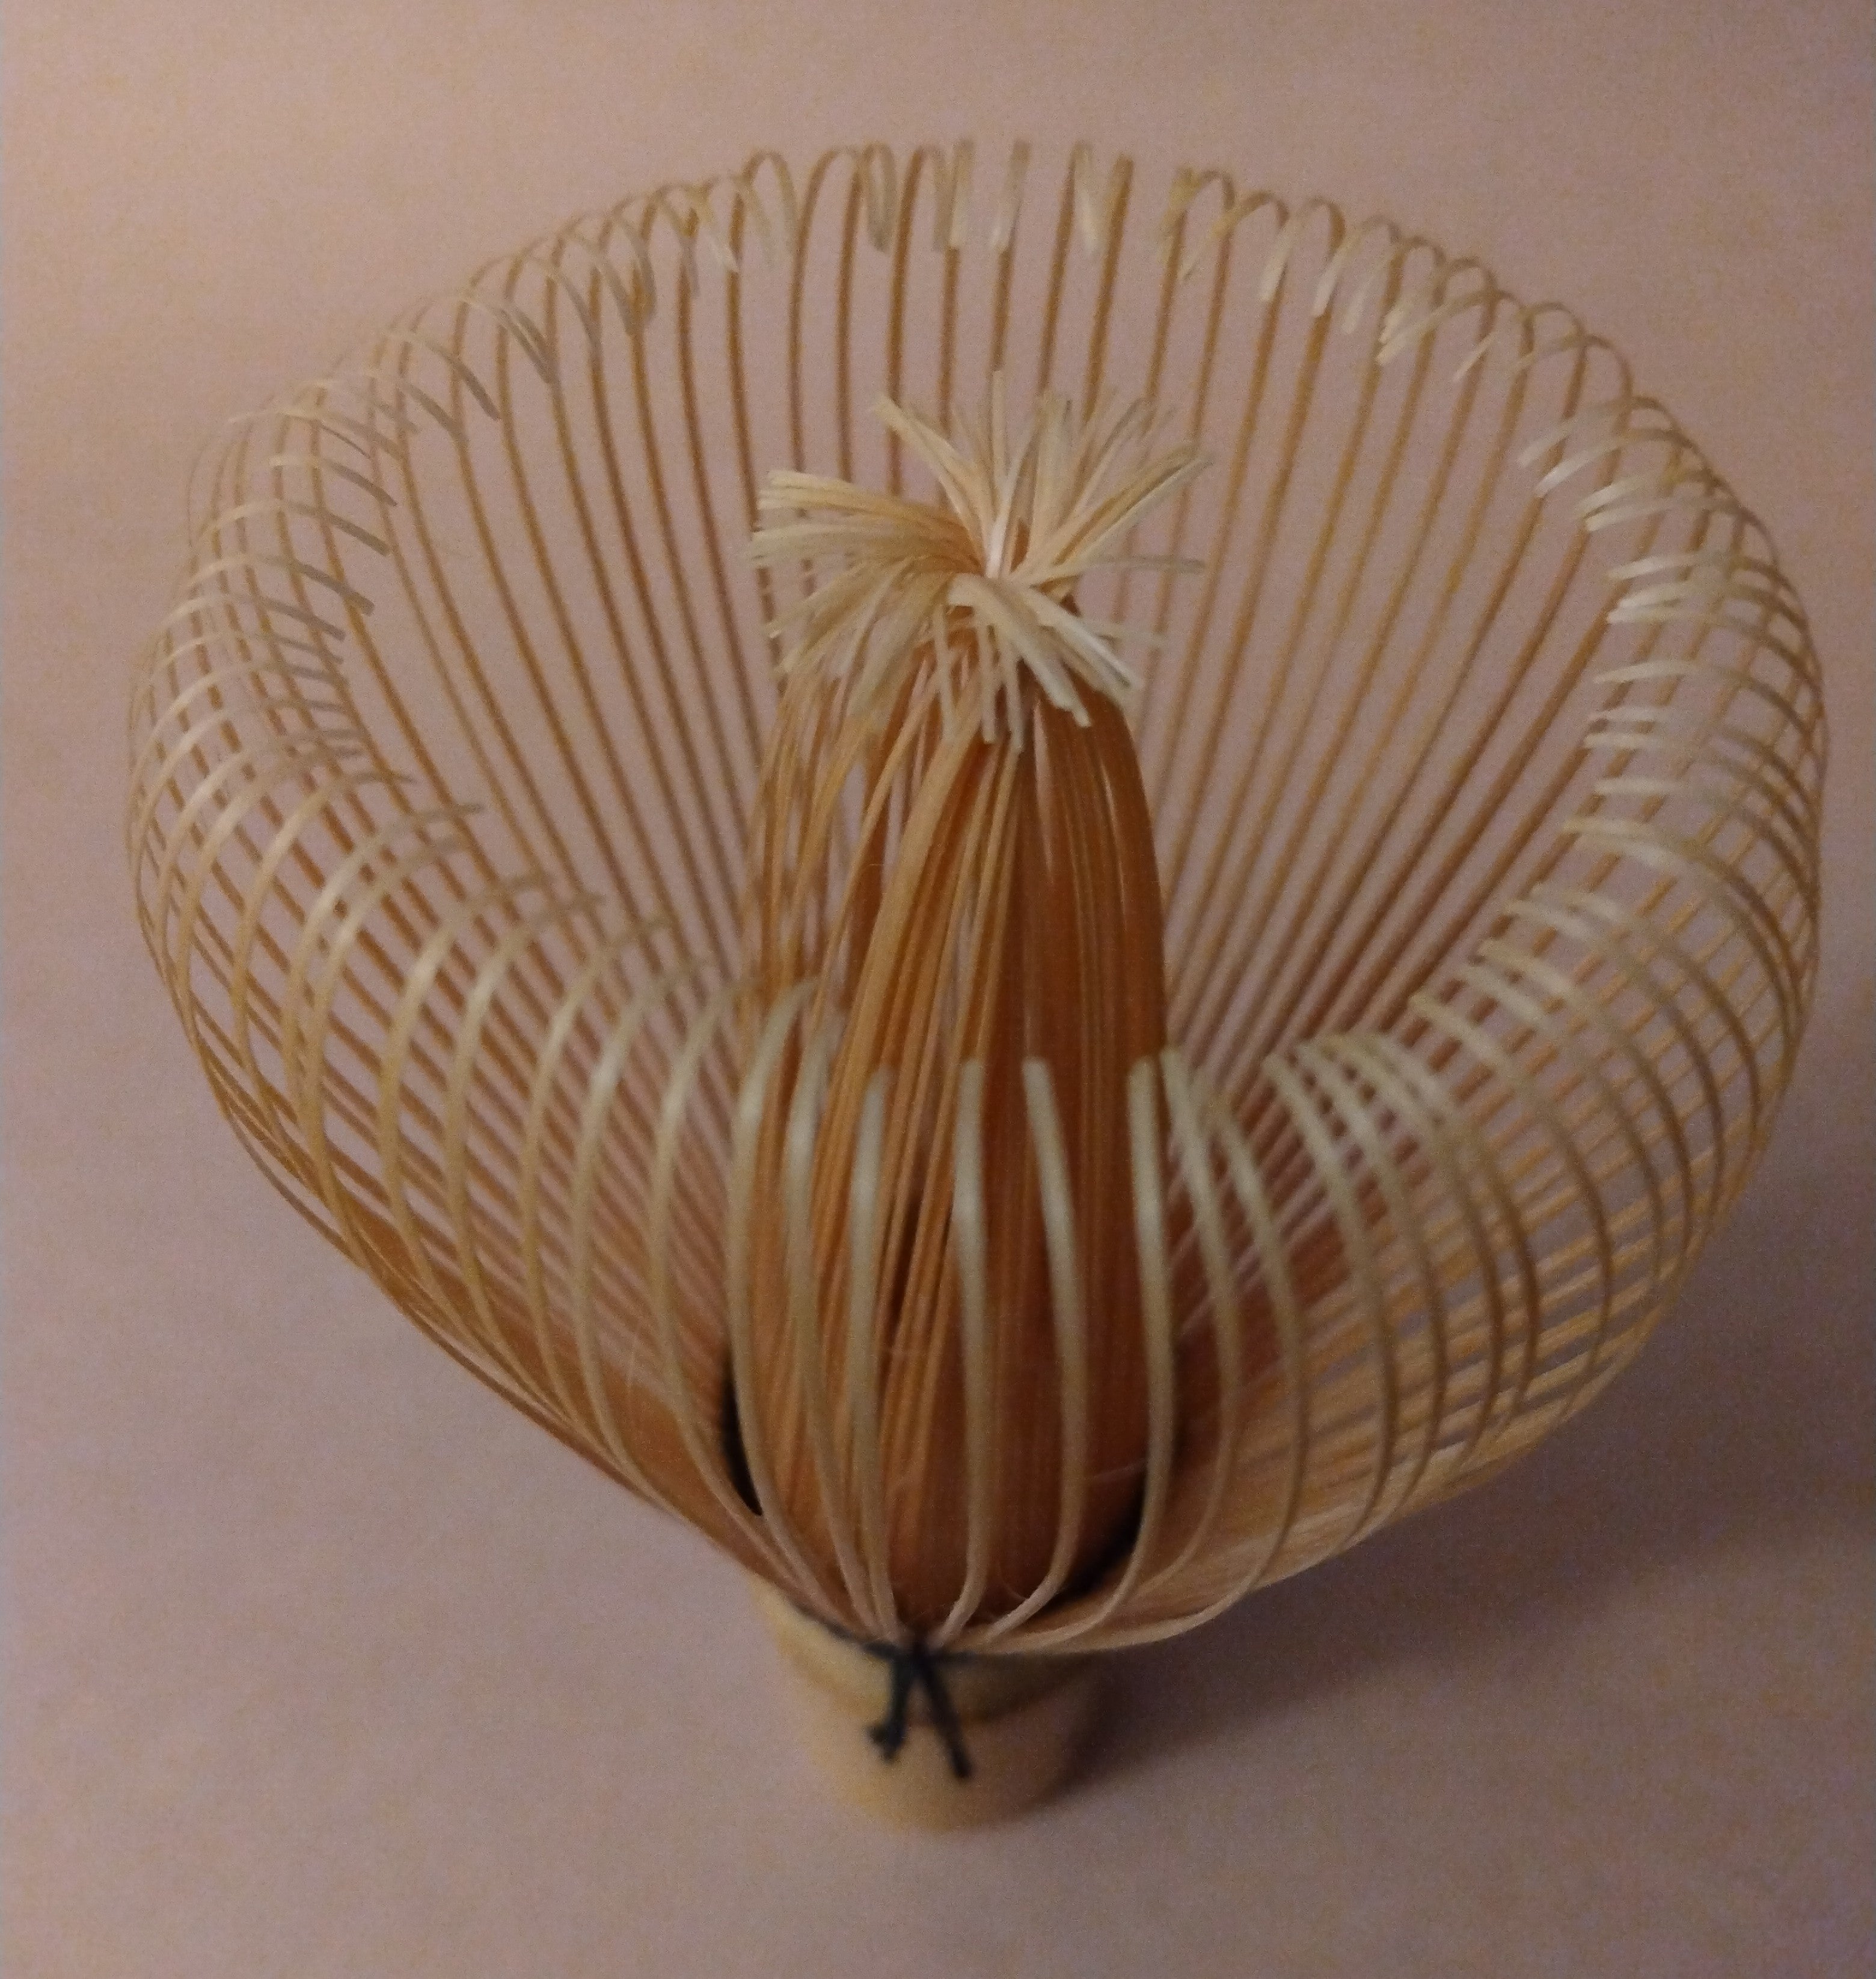 KUBO SABUN - Long-handled bamboo matcha whisk – Ikkyu Tea